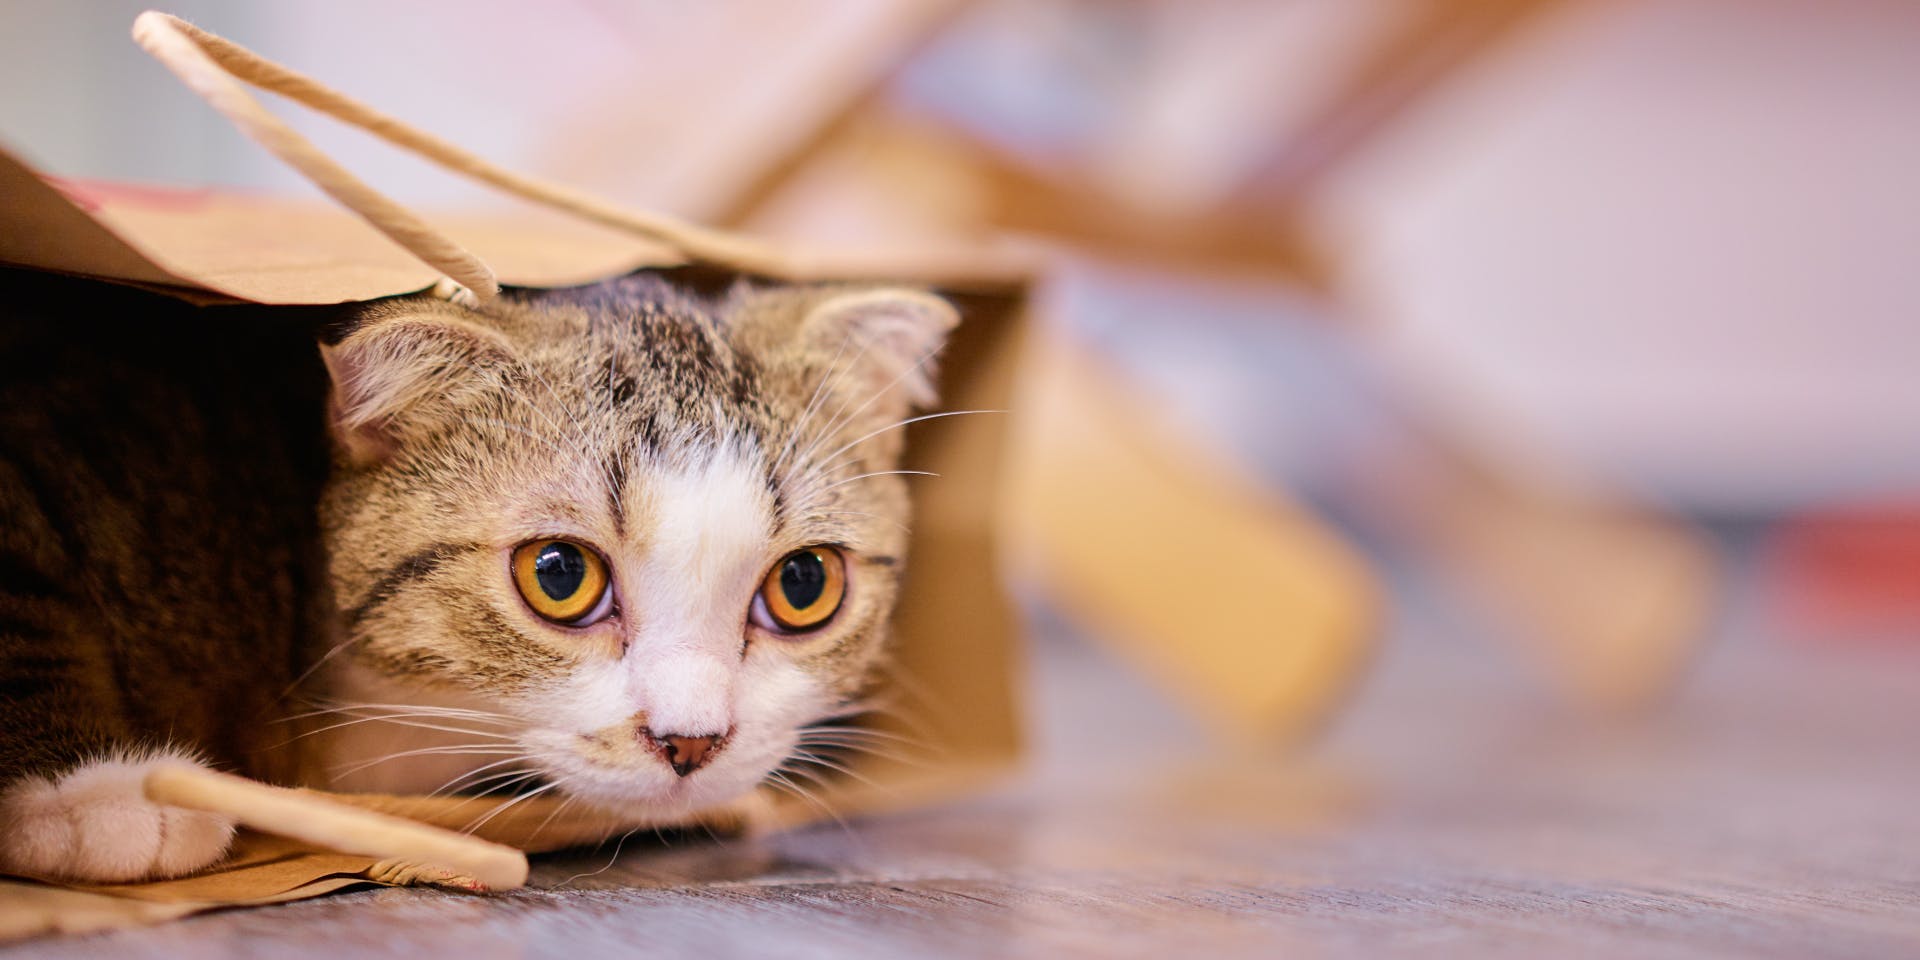 A tabby kitten hiding in a brown paper bag.